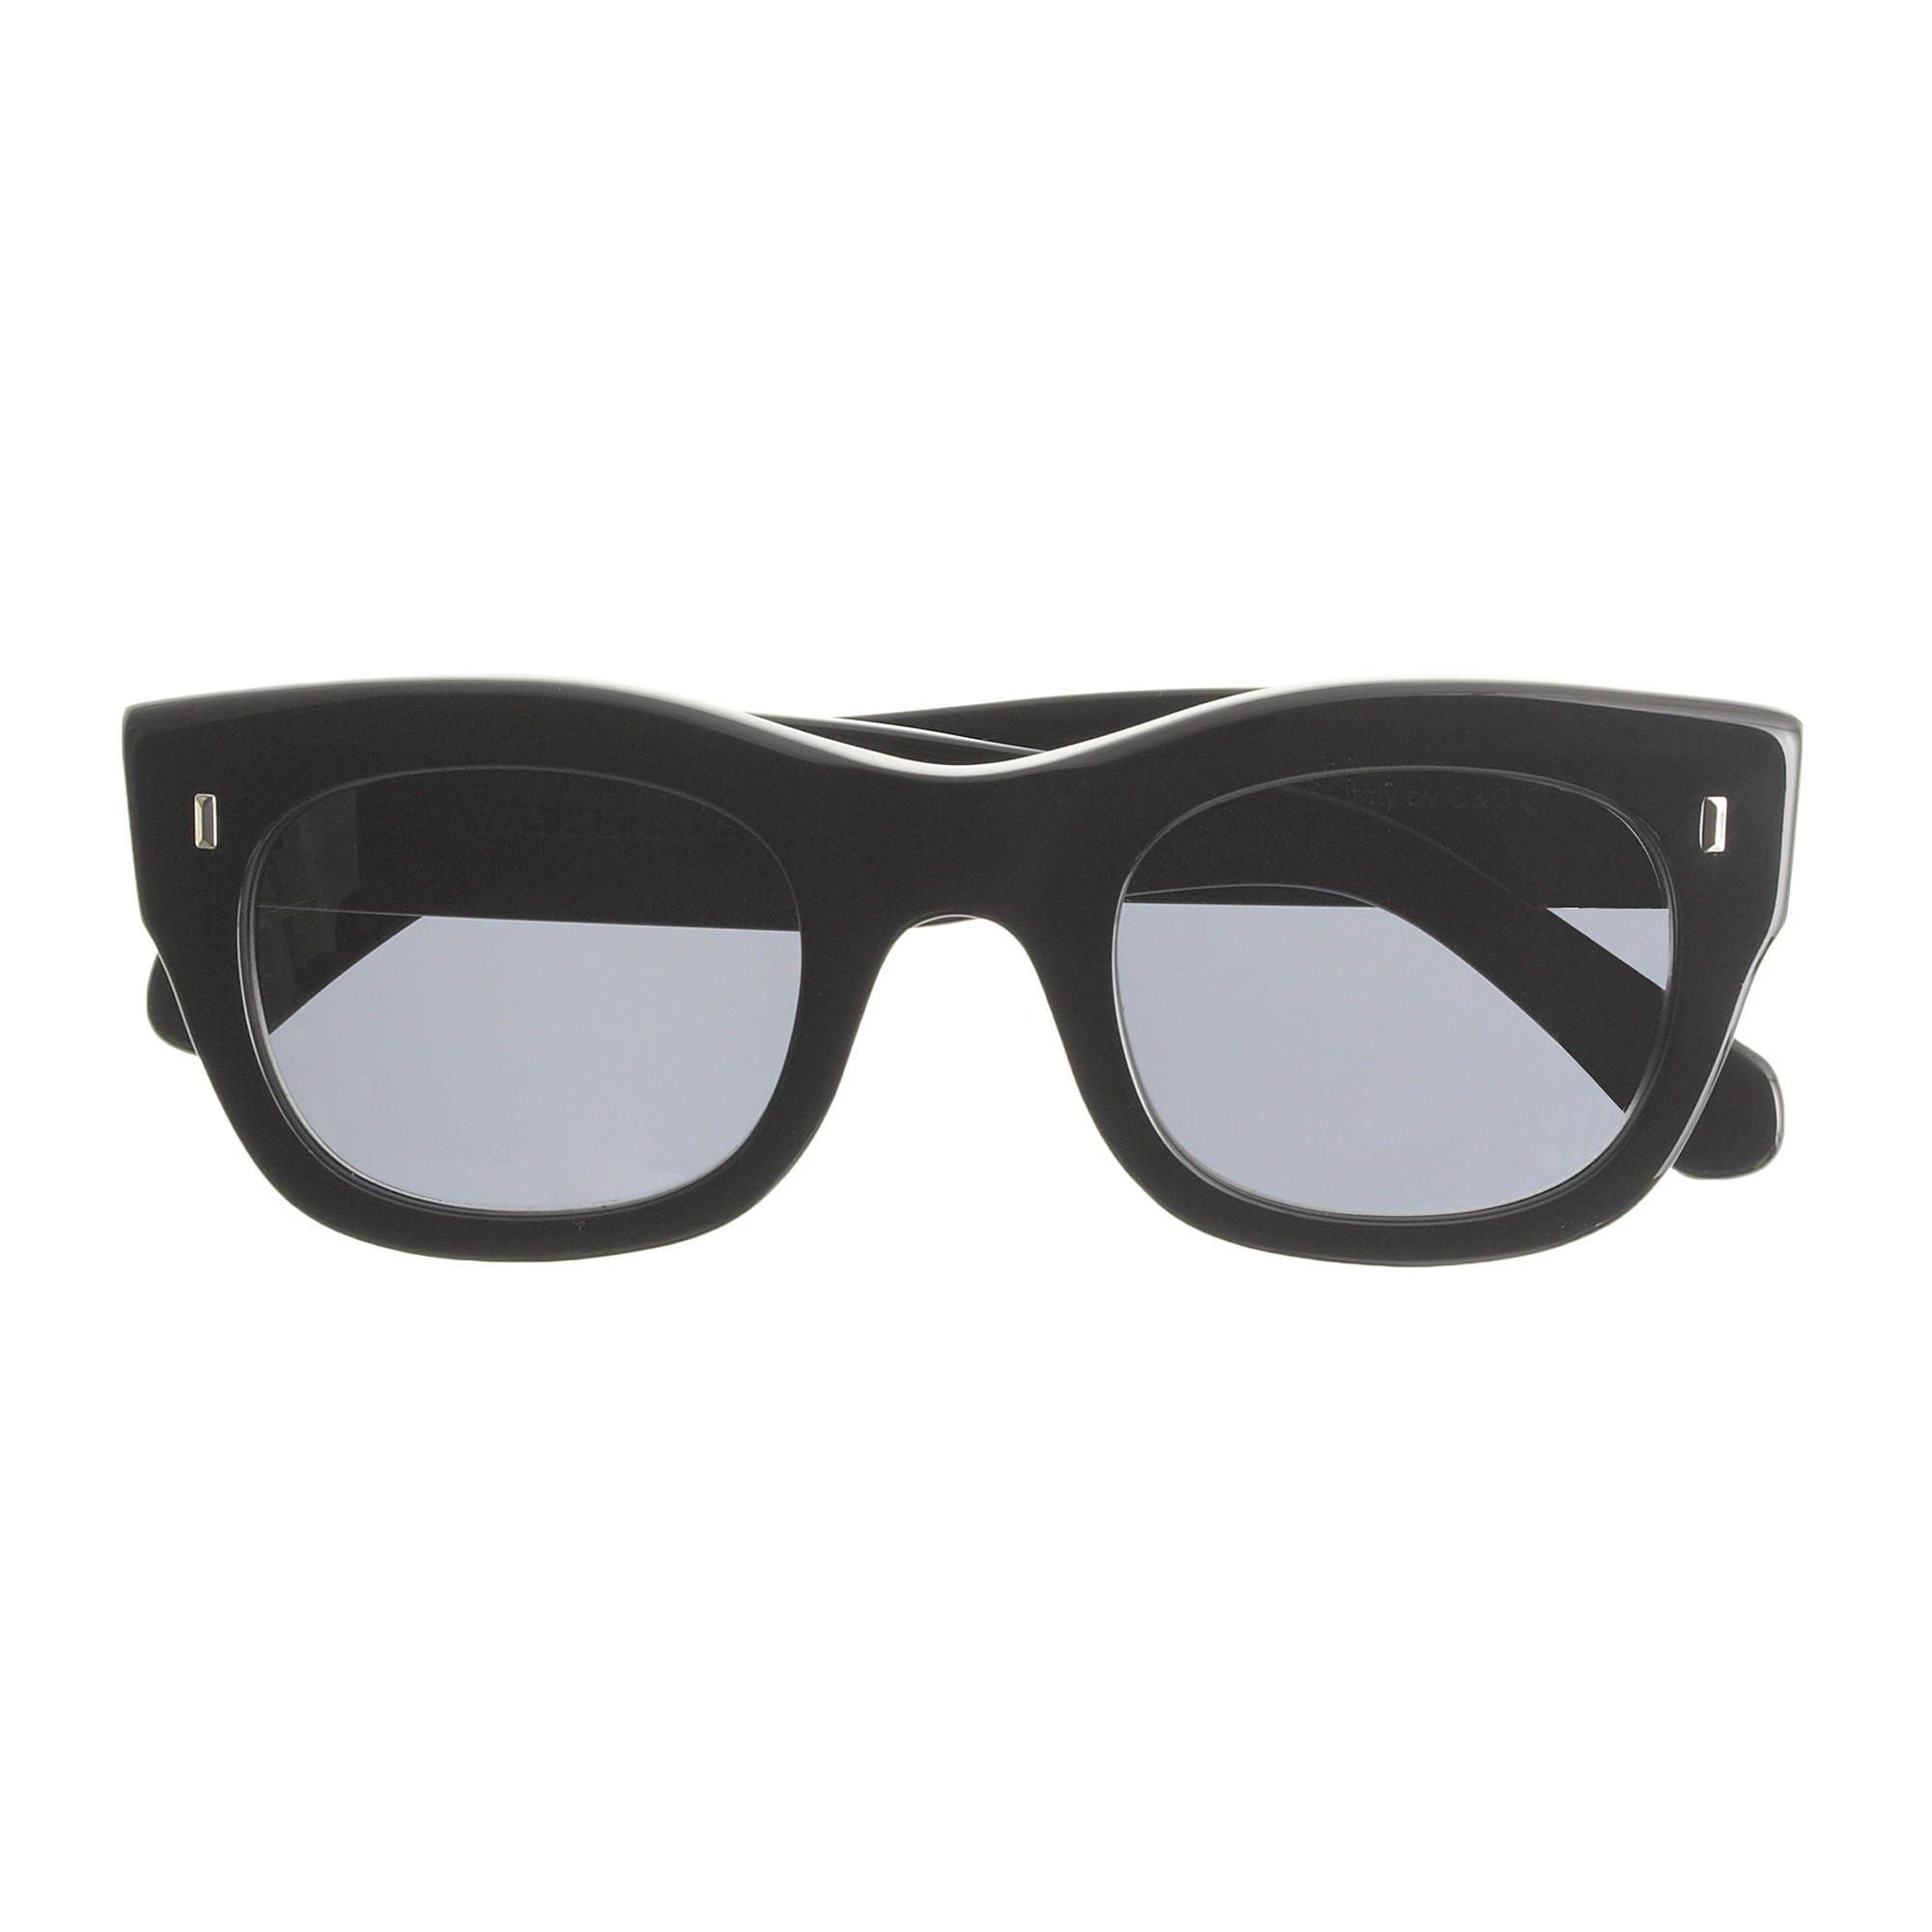 Lyst - Cutler & Gross 0261 Sunglasses in Black